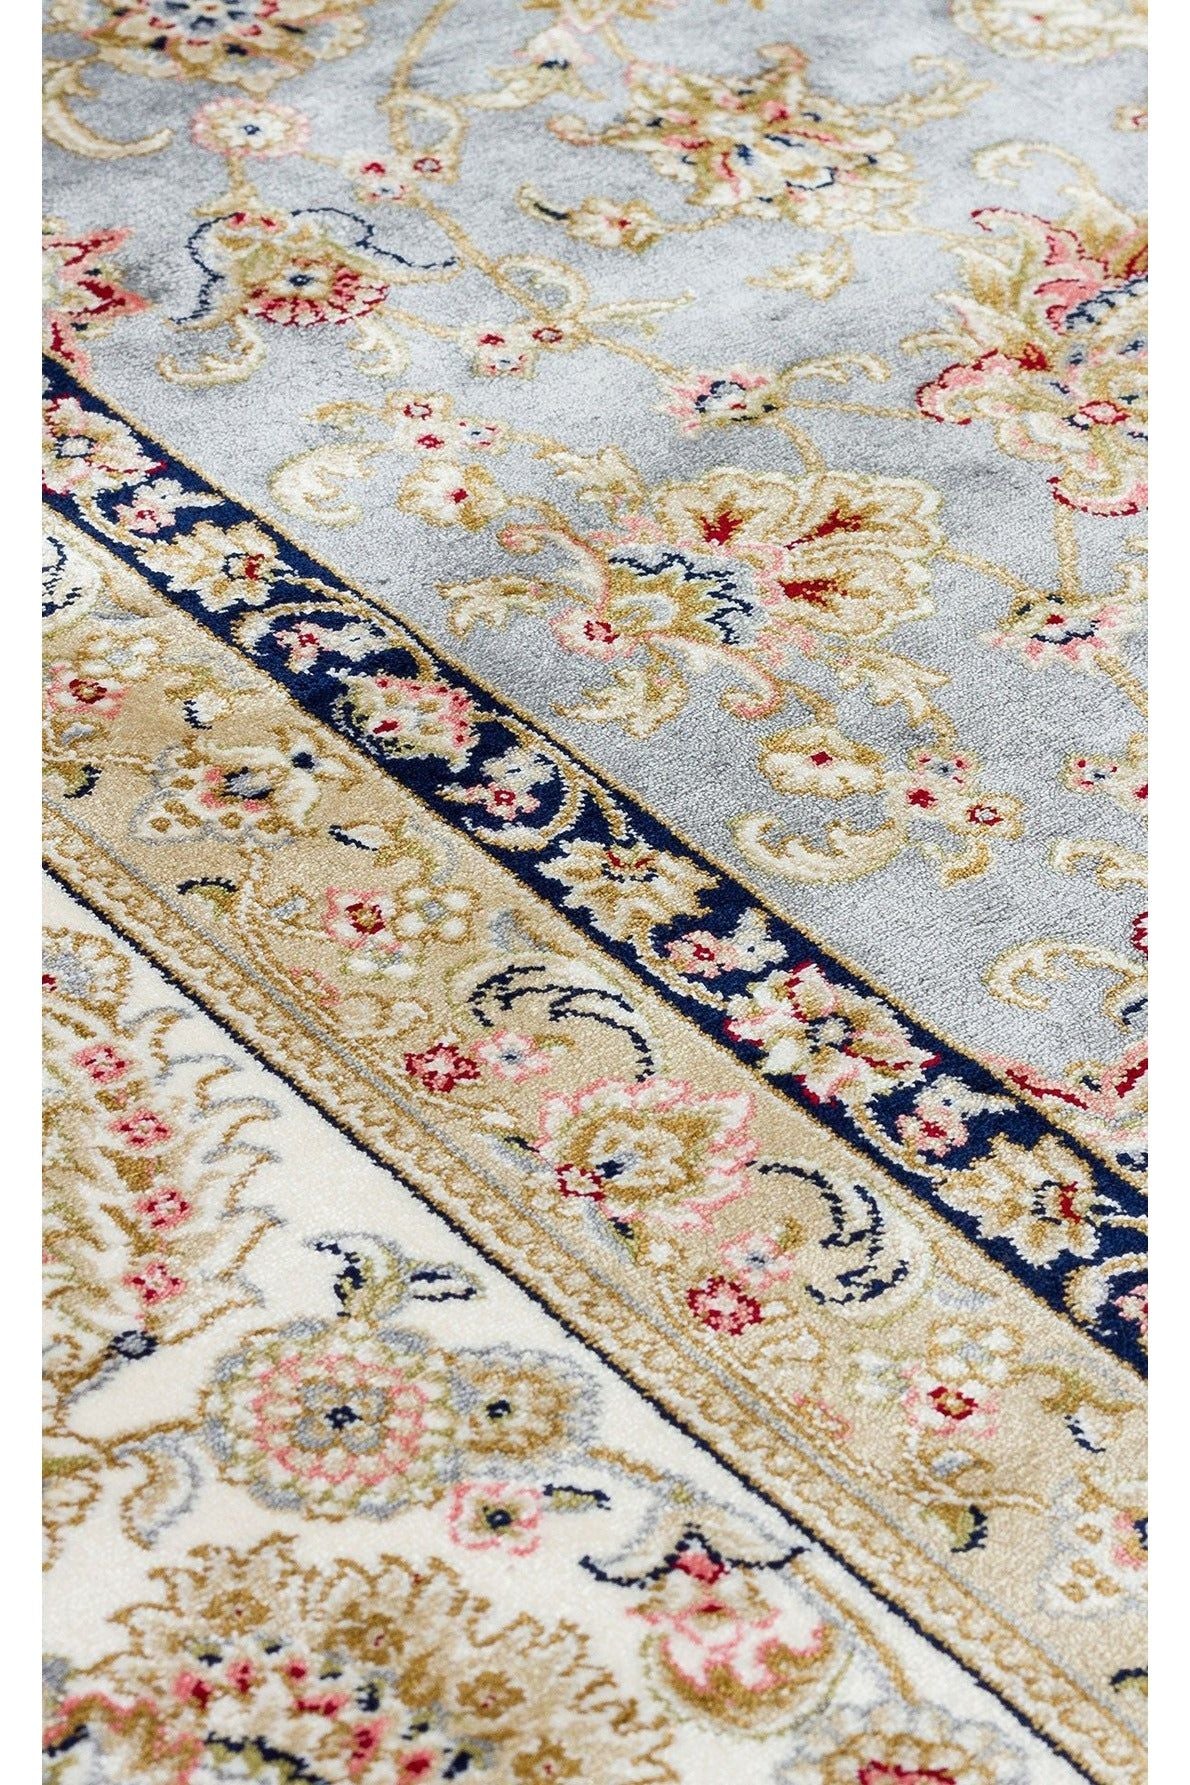 #Turkish_Carpets_Rugs# #Modern_Carpets# #Abrash_Carpets#Isf 03 Grey Cream